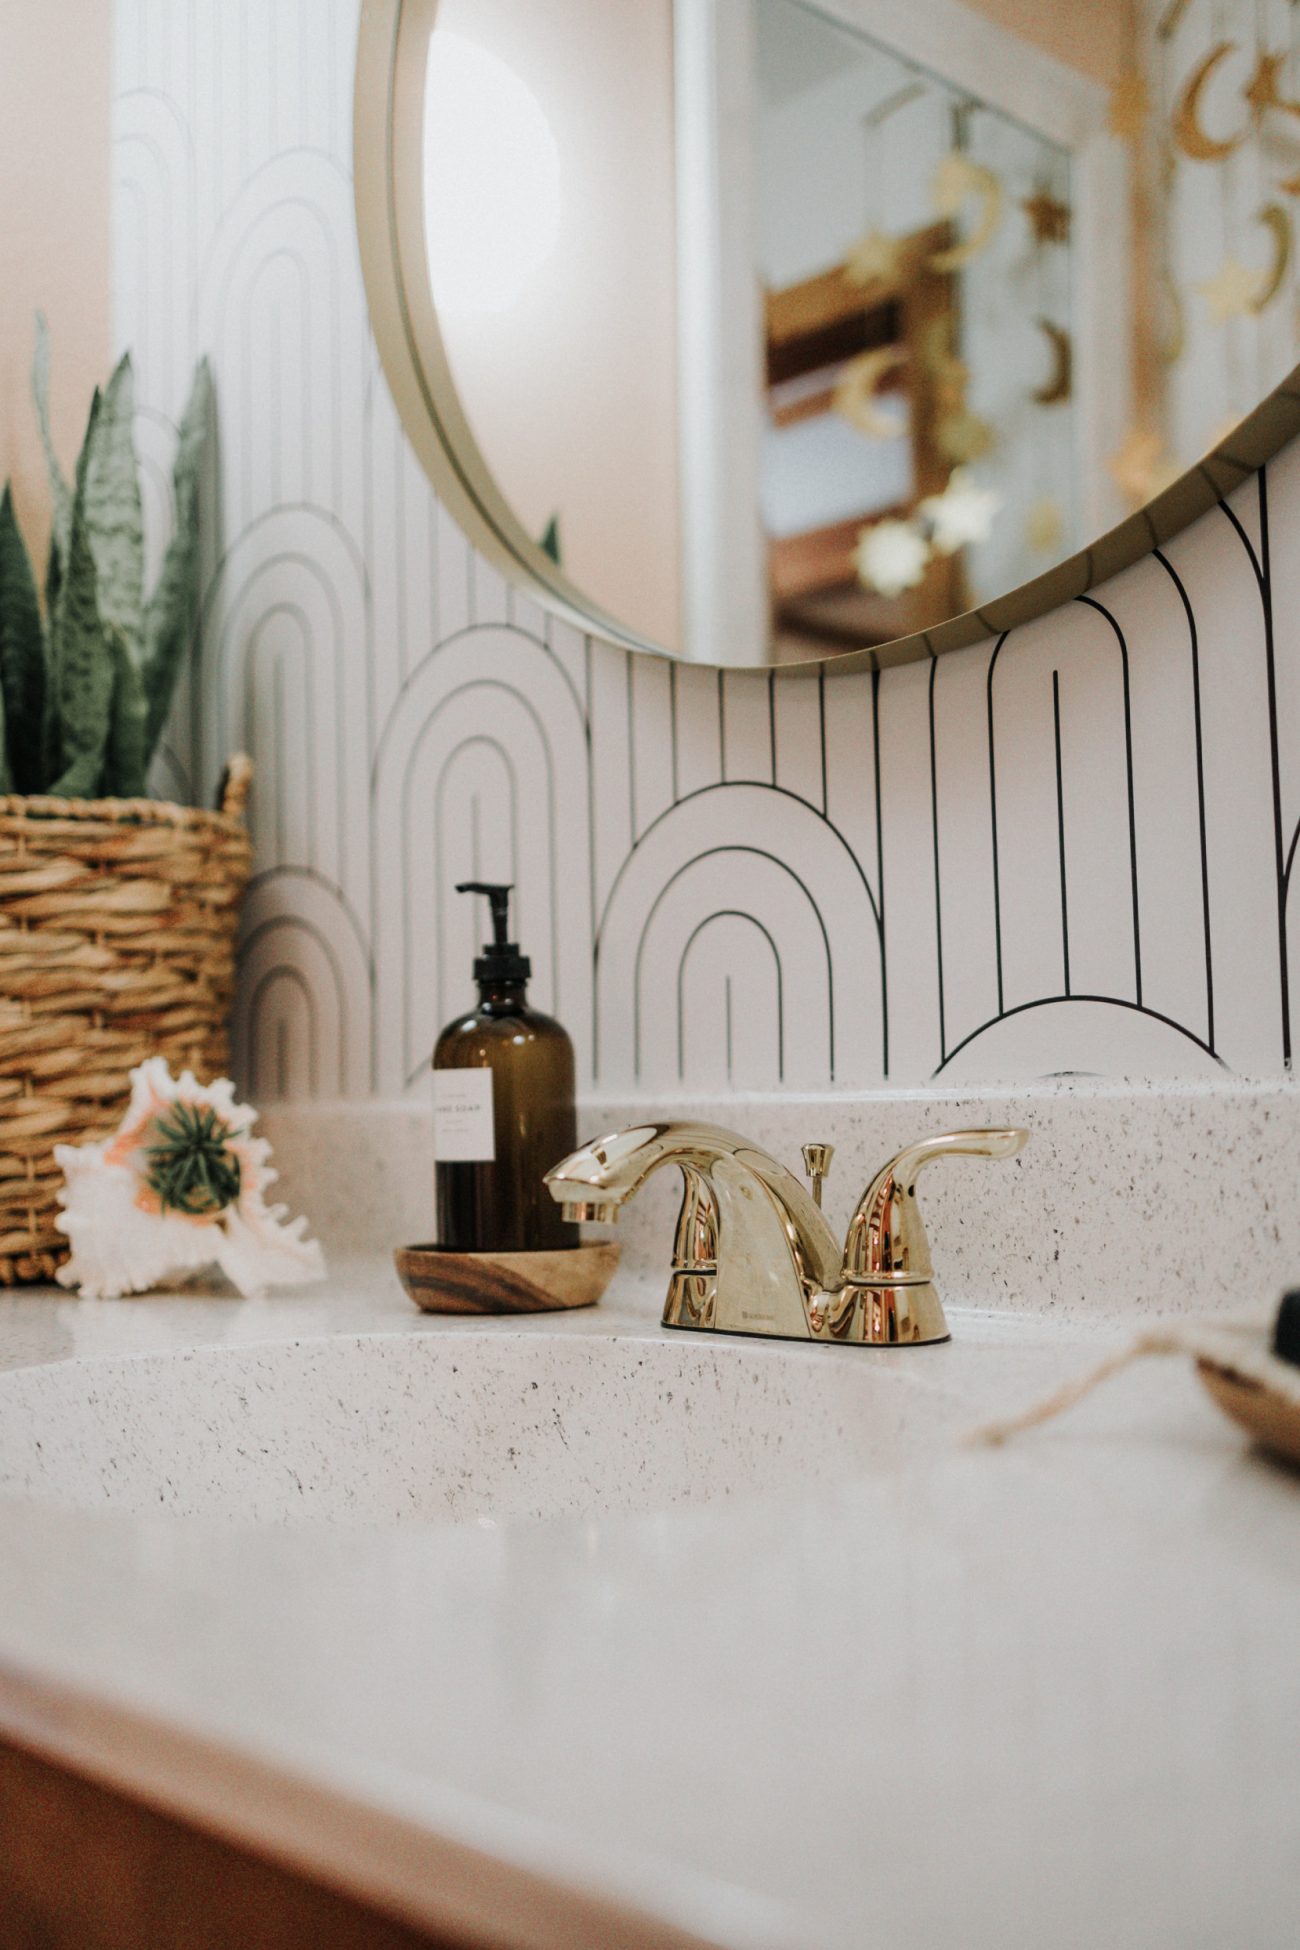 Bathroom with geometric wallpaper, quartz countertop and round mirror